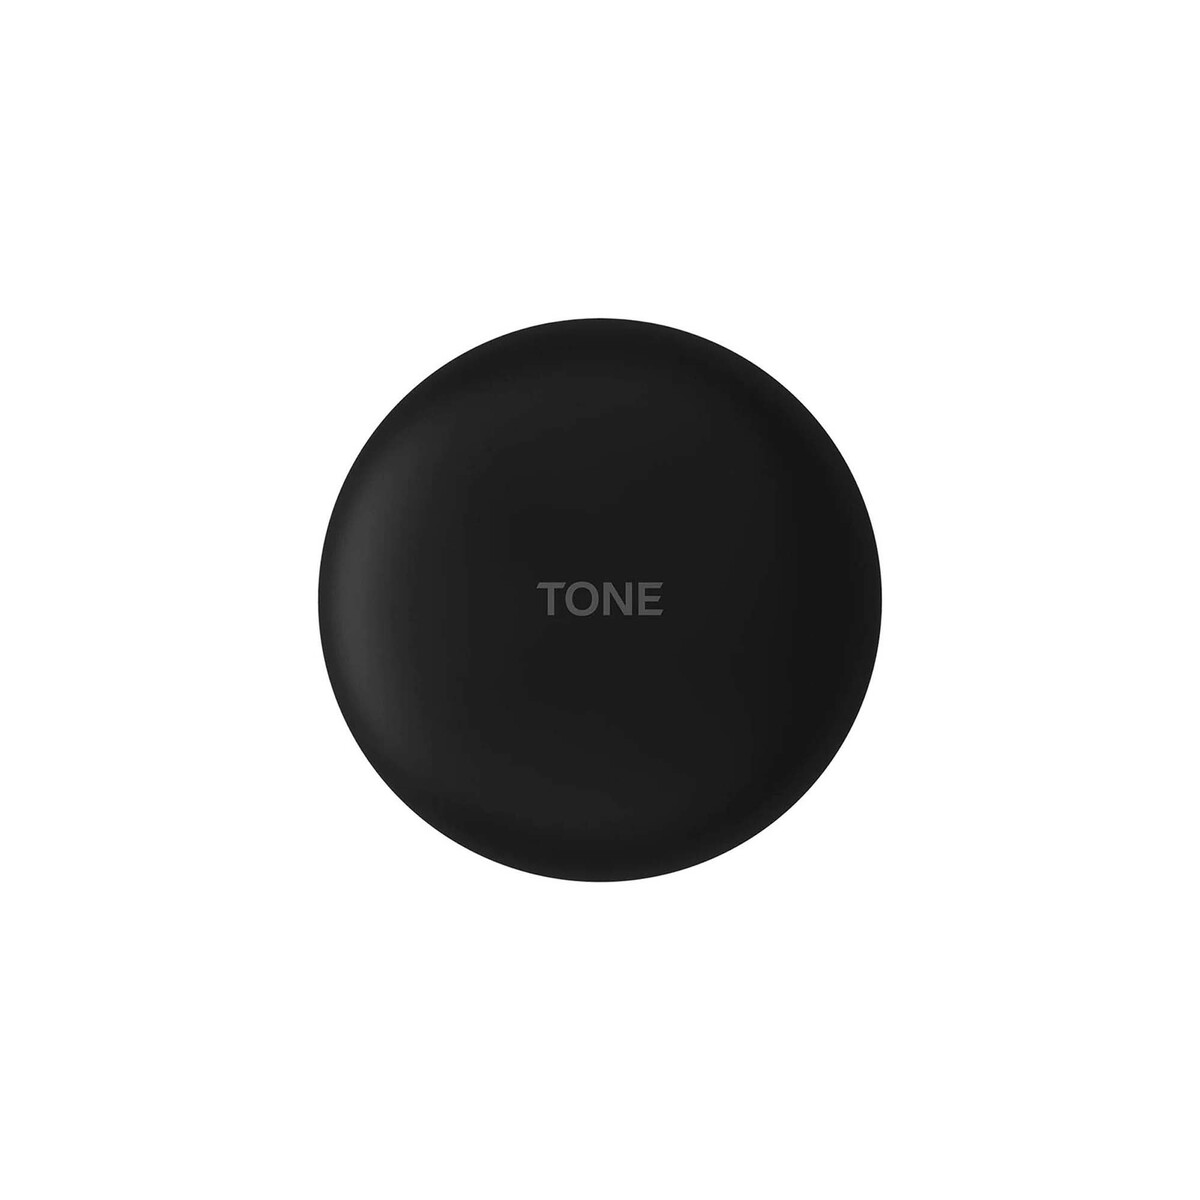 LG Tone Free HBS-FN6 Wireless Earbuds Black